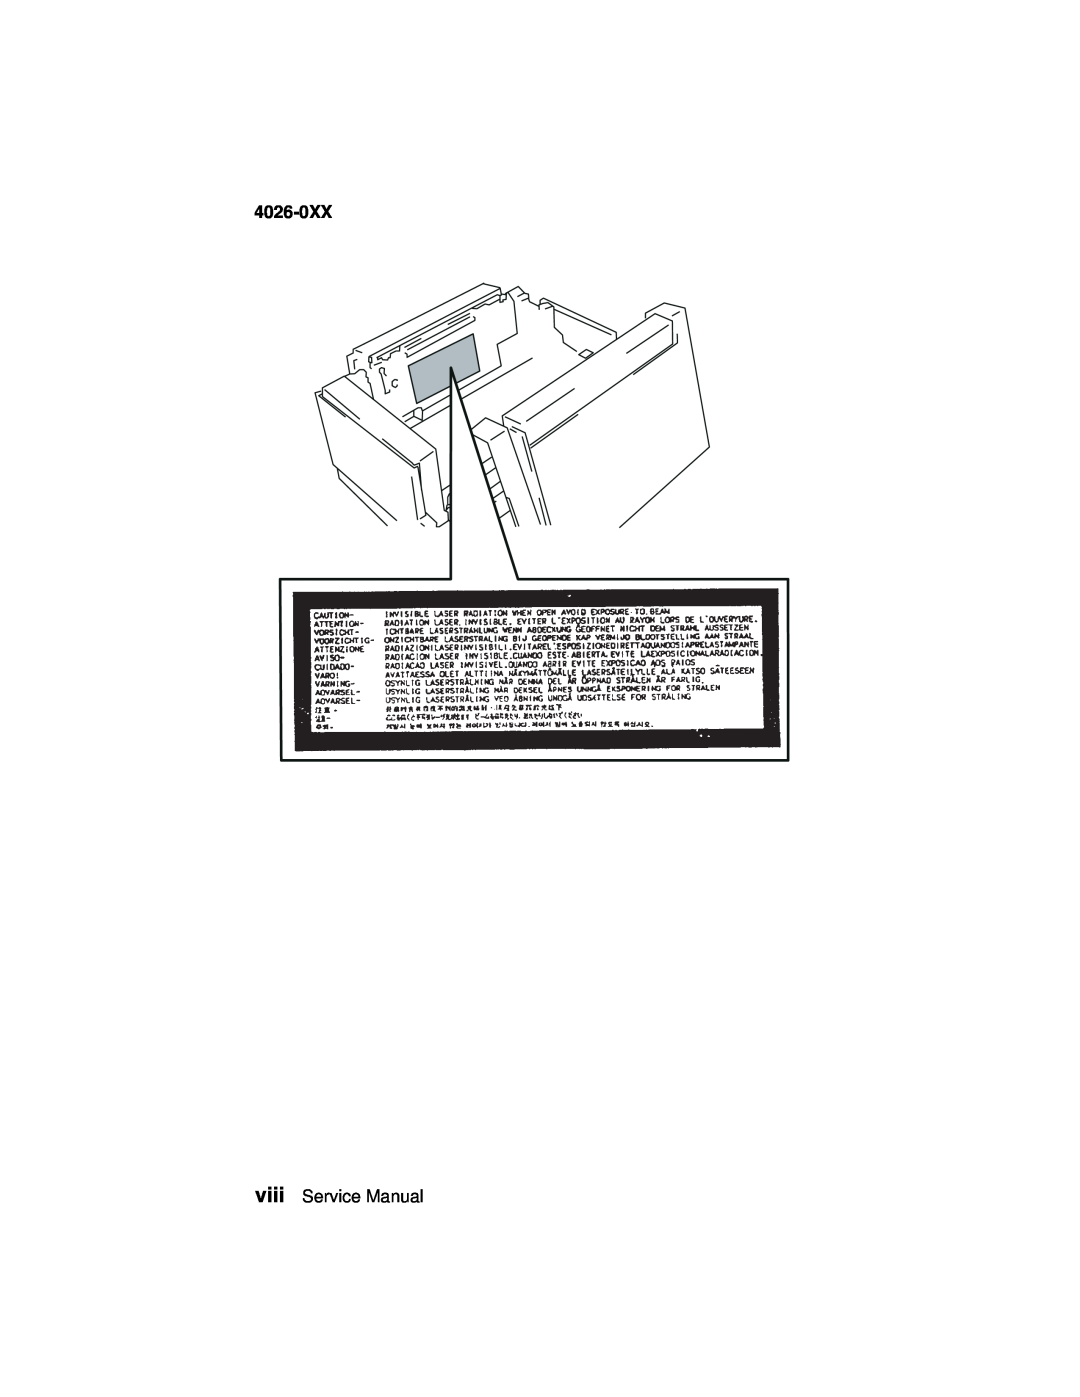 Lexmark 4026-0XX manual viiiService Manual 